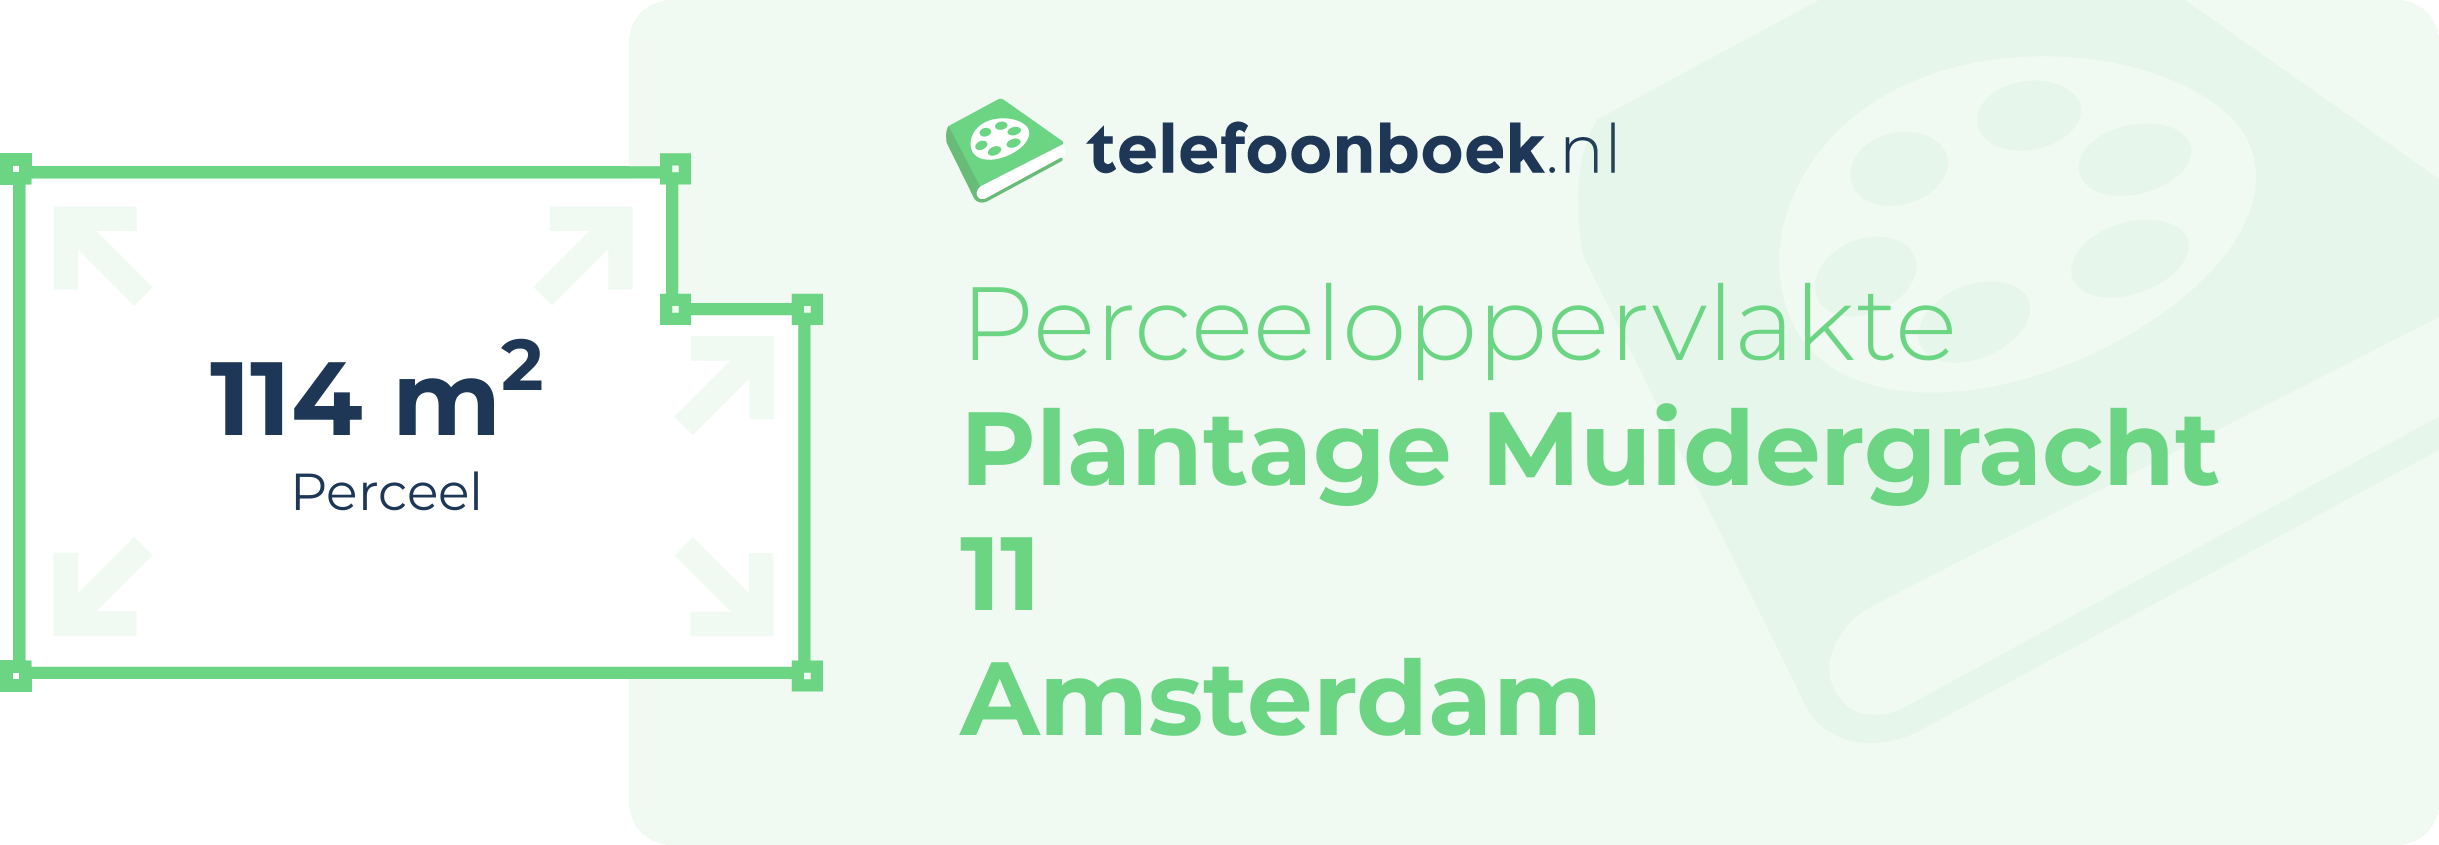 Perceeloppervlakte Plantage Muidergracht 11 Amsterdam